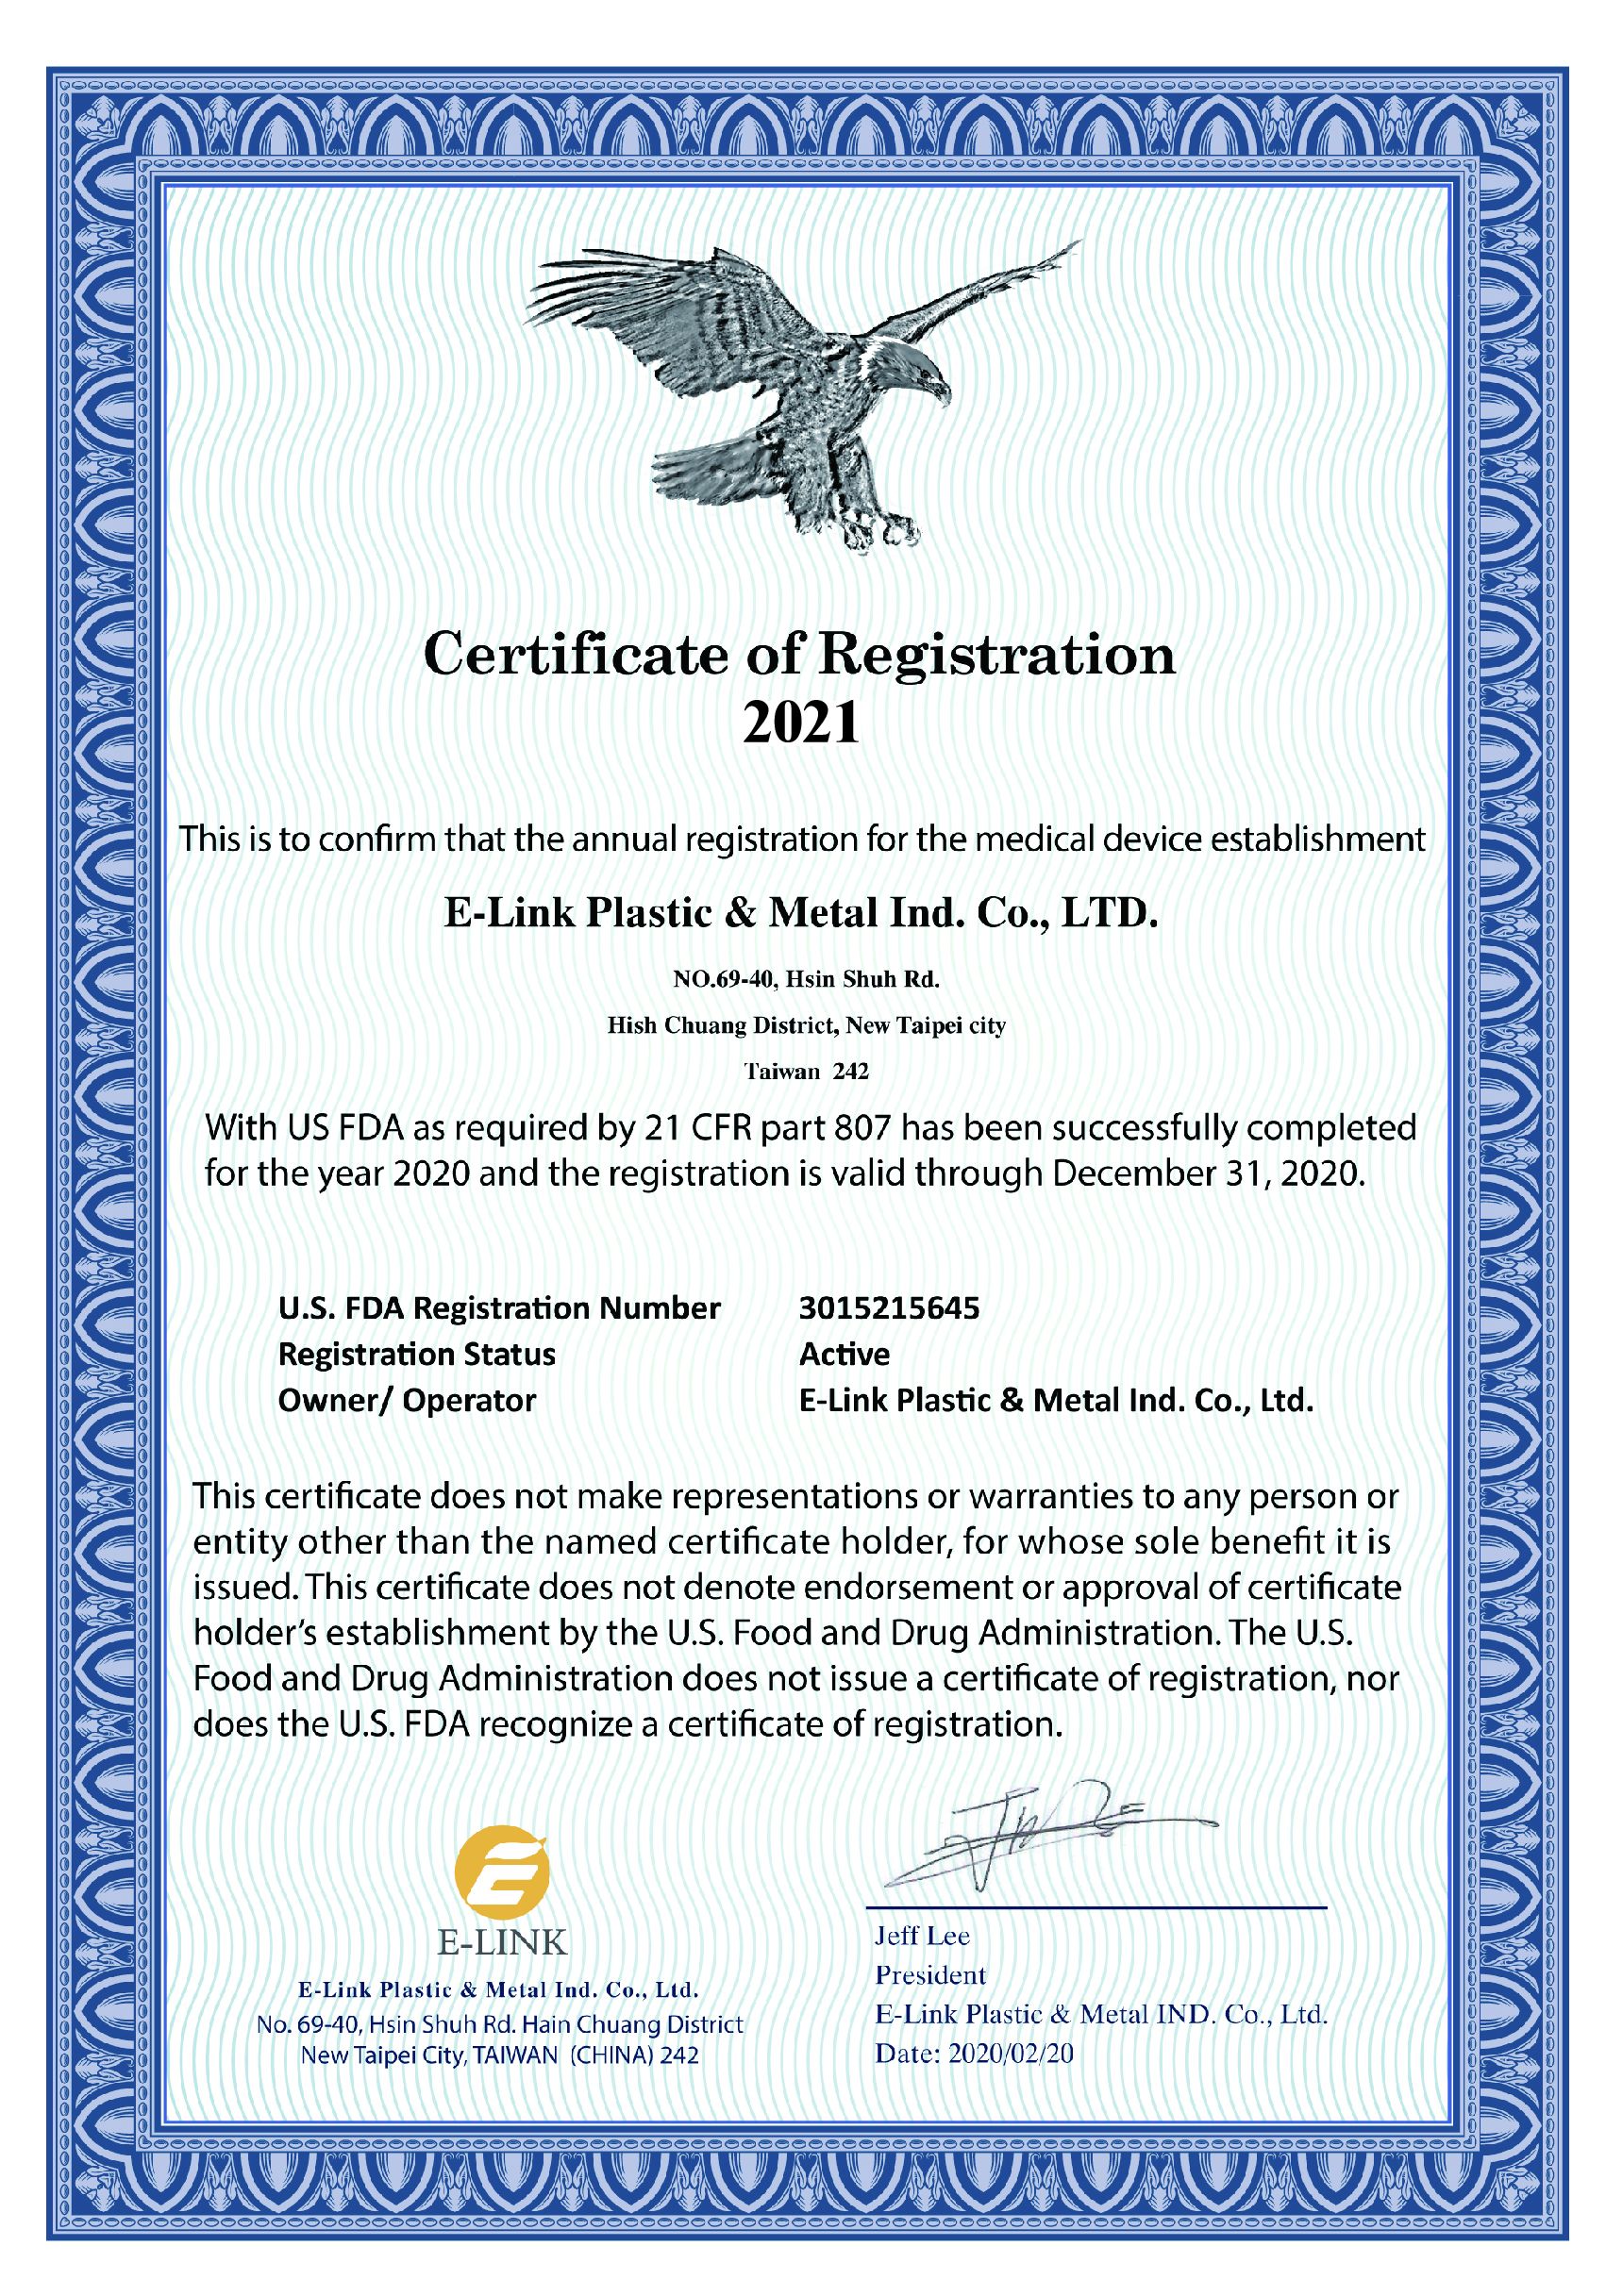 E-link صناديق الحبوب حصلت على شهادة موافقة إدارة الأغذية والعقاقير